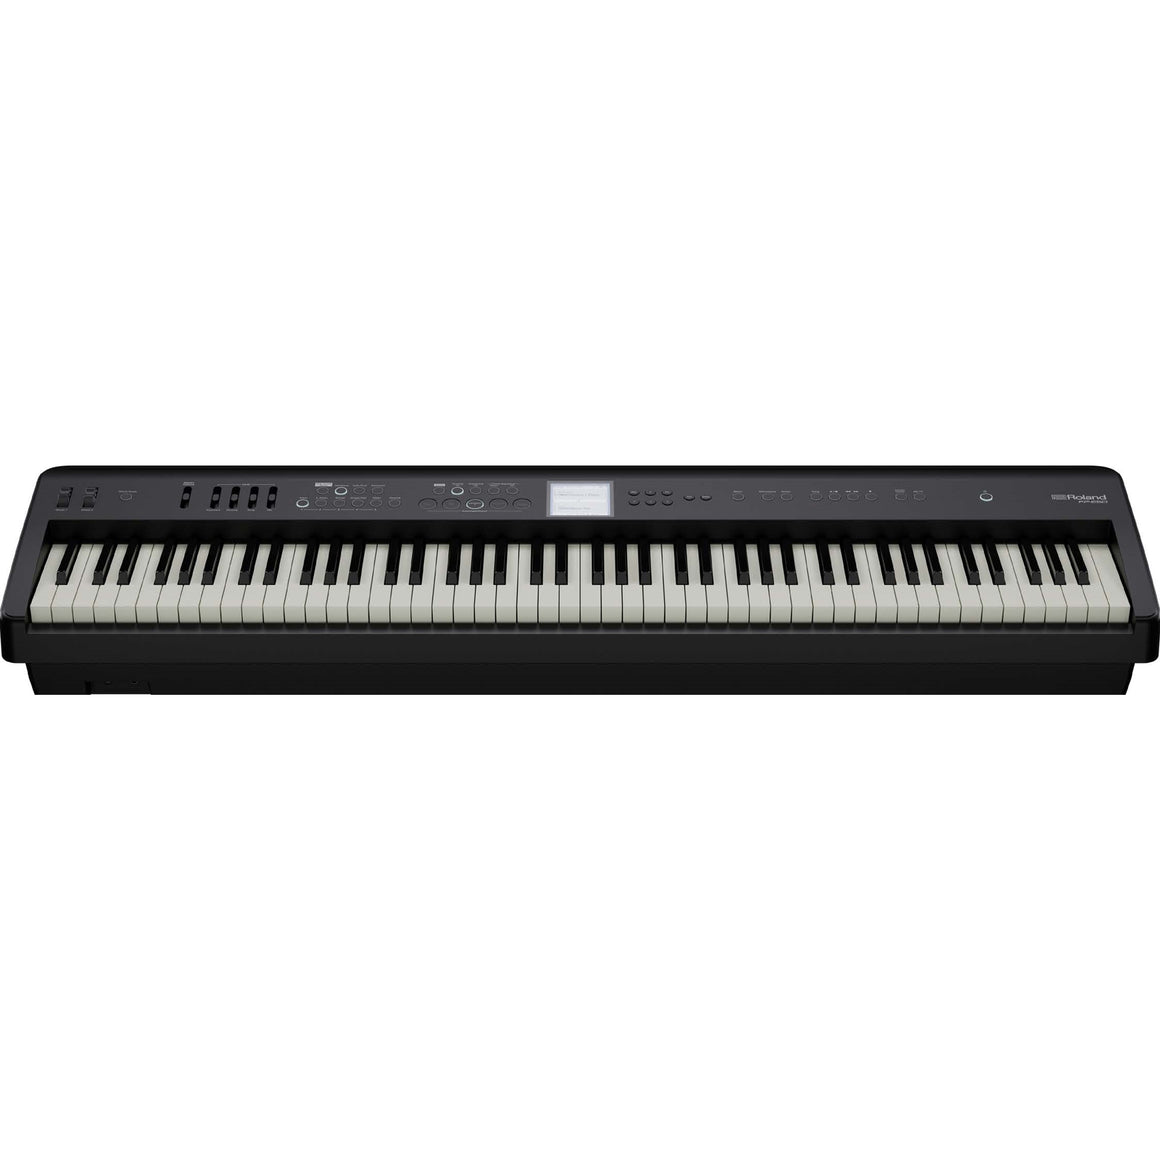 ROLAND FPE50BK Premium 88-Key Digital Piano with SuperNATURAL Piano Engine